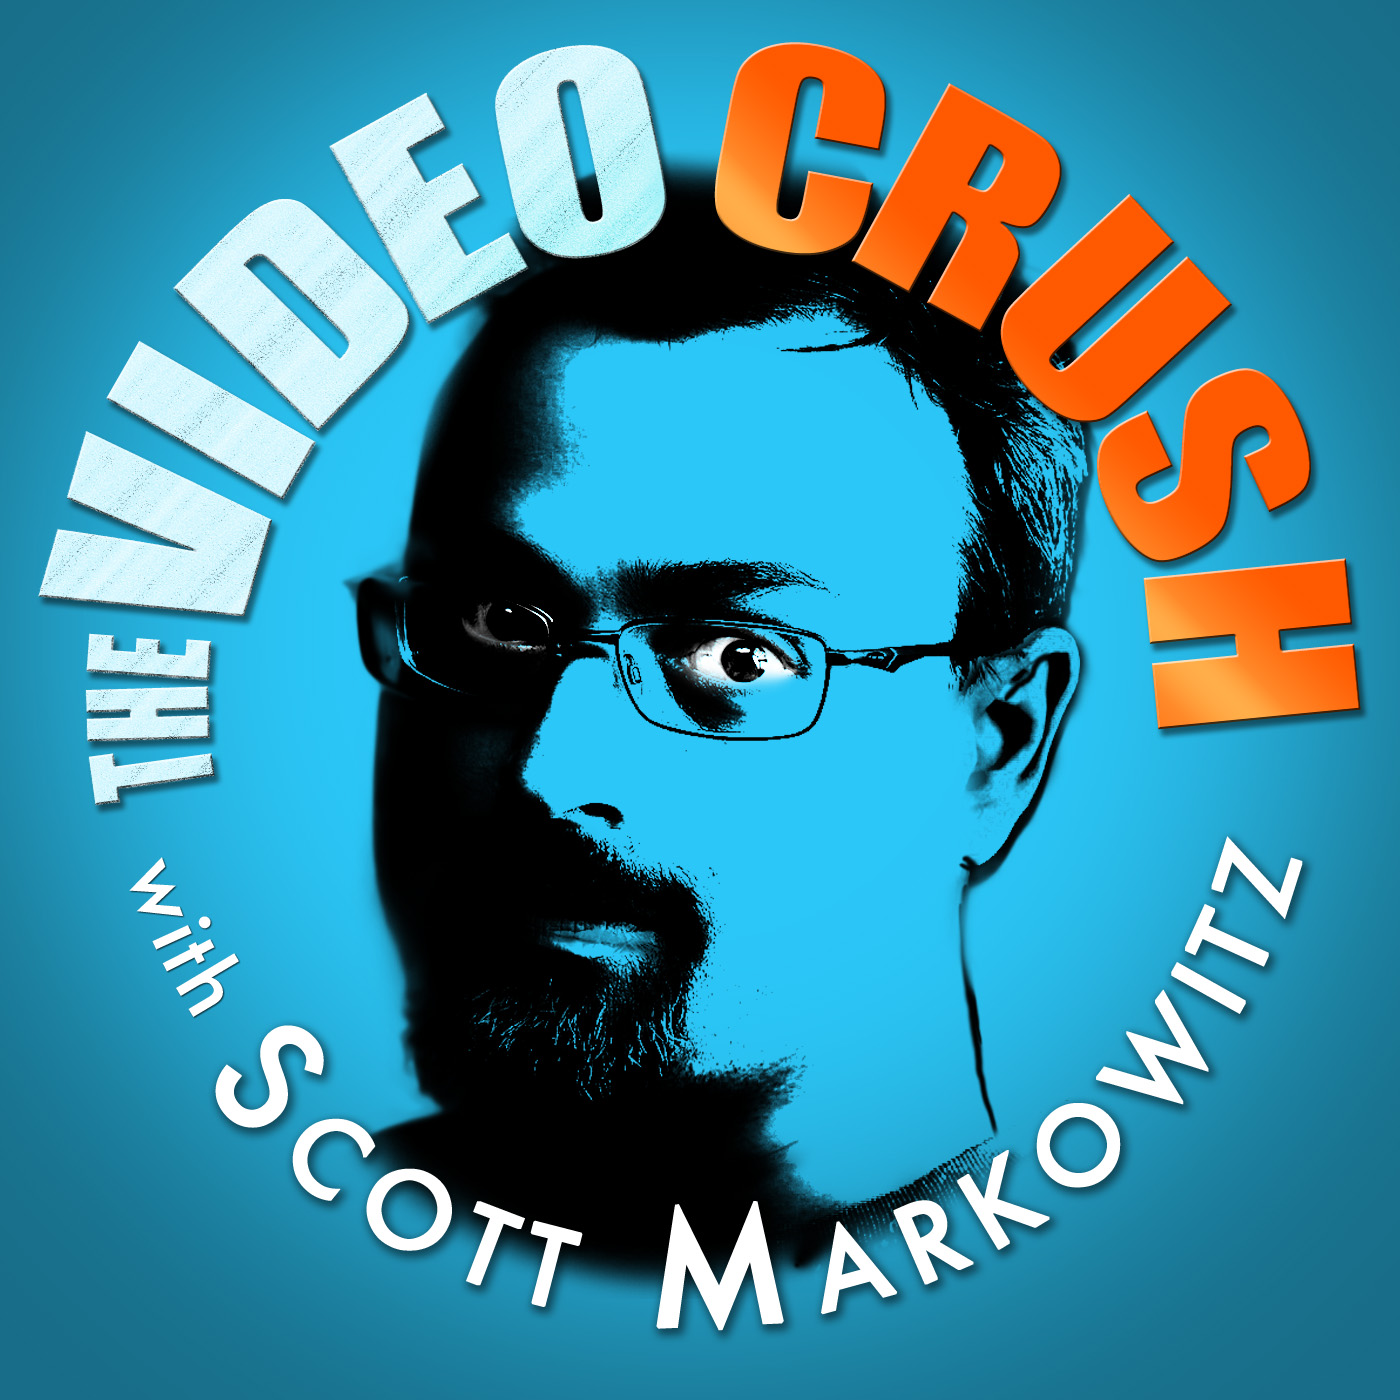 The Video Crush with Scott Markowitz